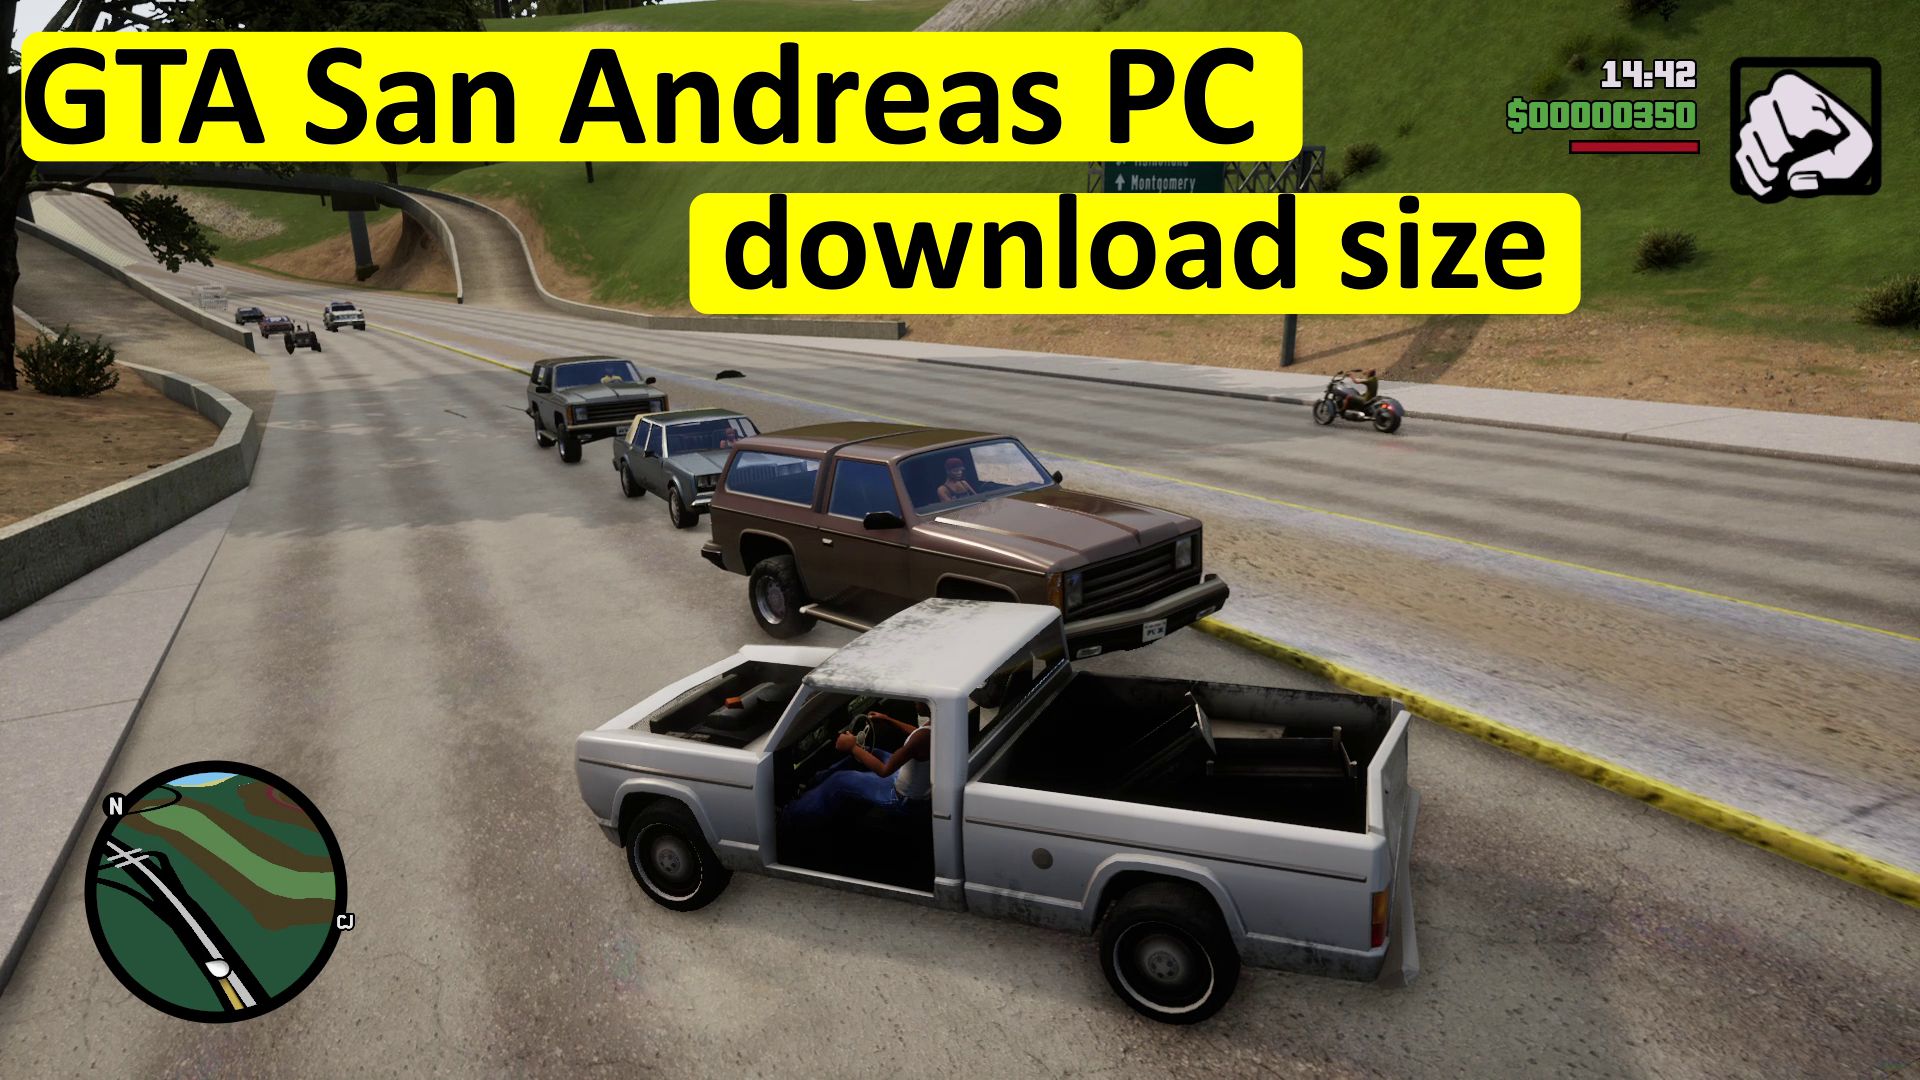 GTA San Andreas PC download size